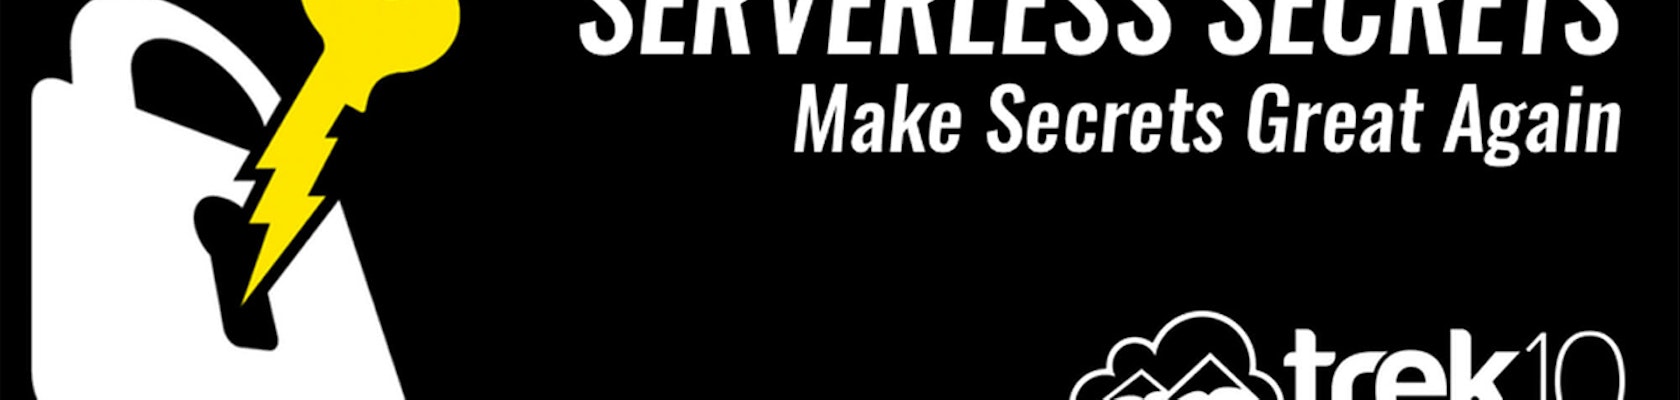 Serverless Secrets Hero Image